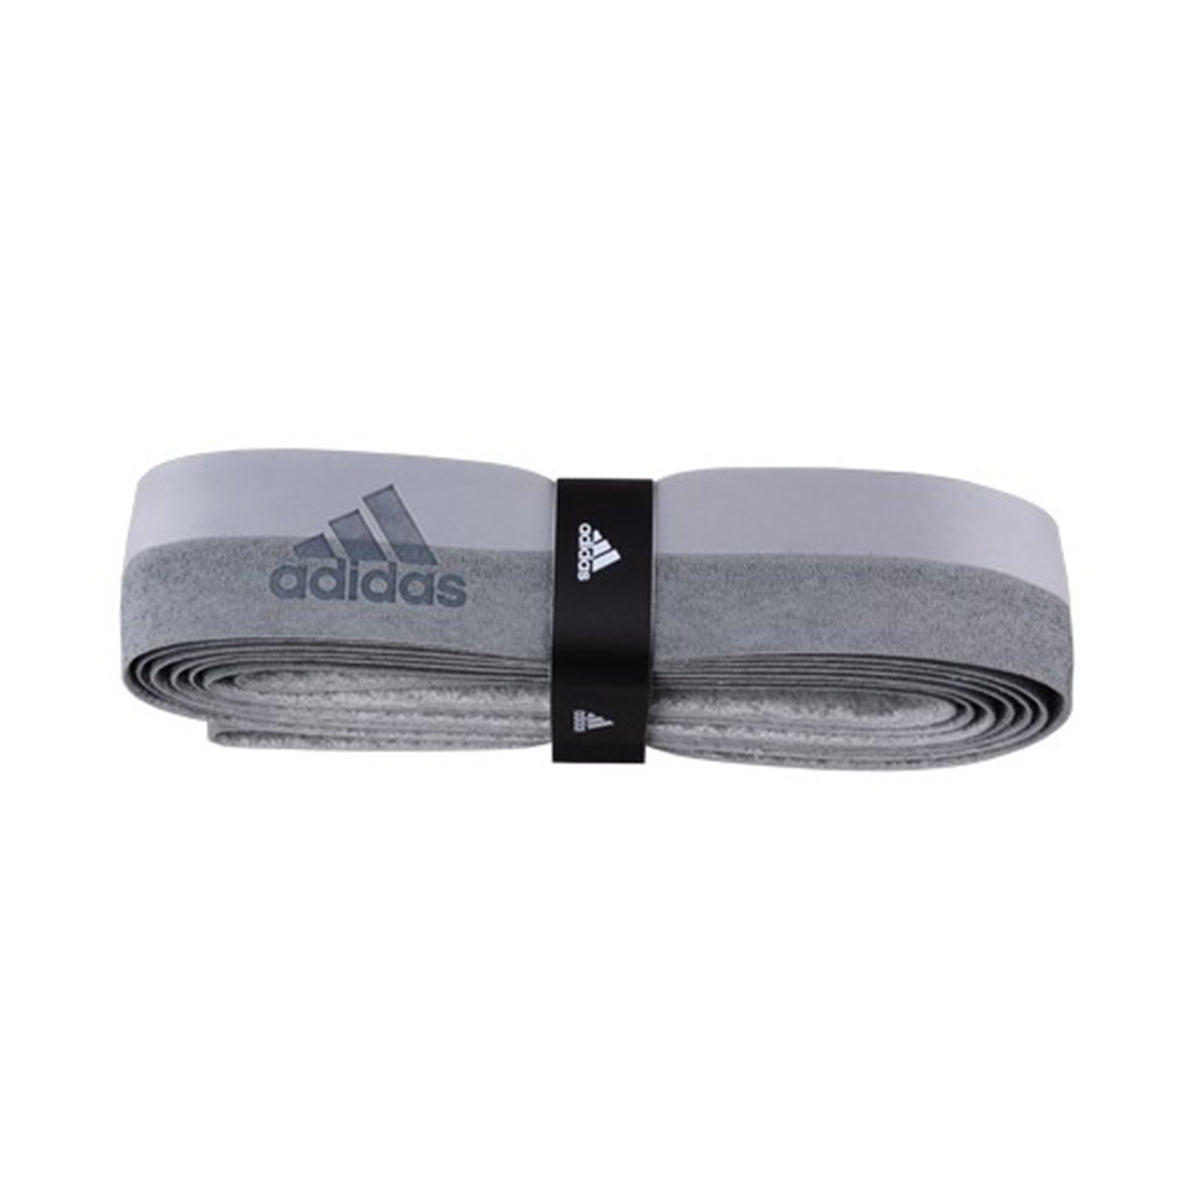 Adidas Adigrip Single: Grey